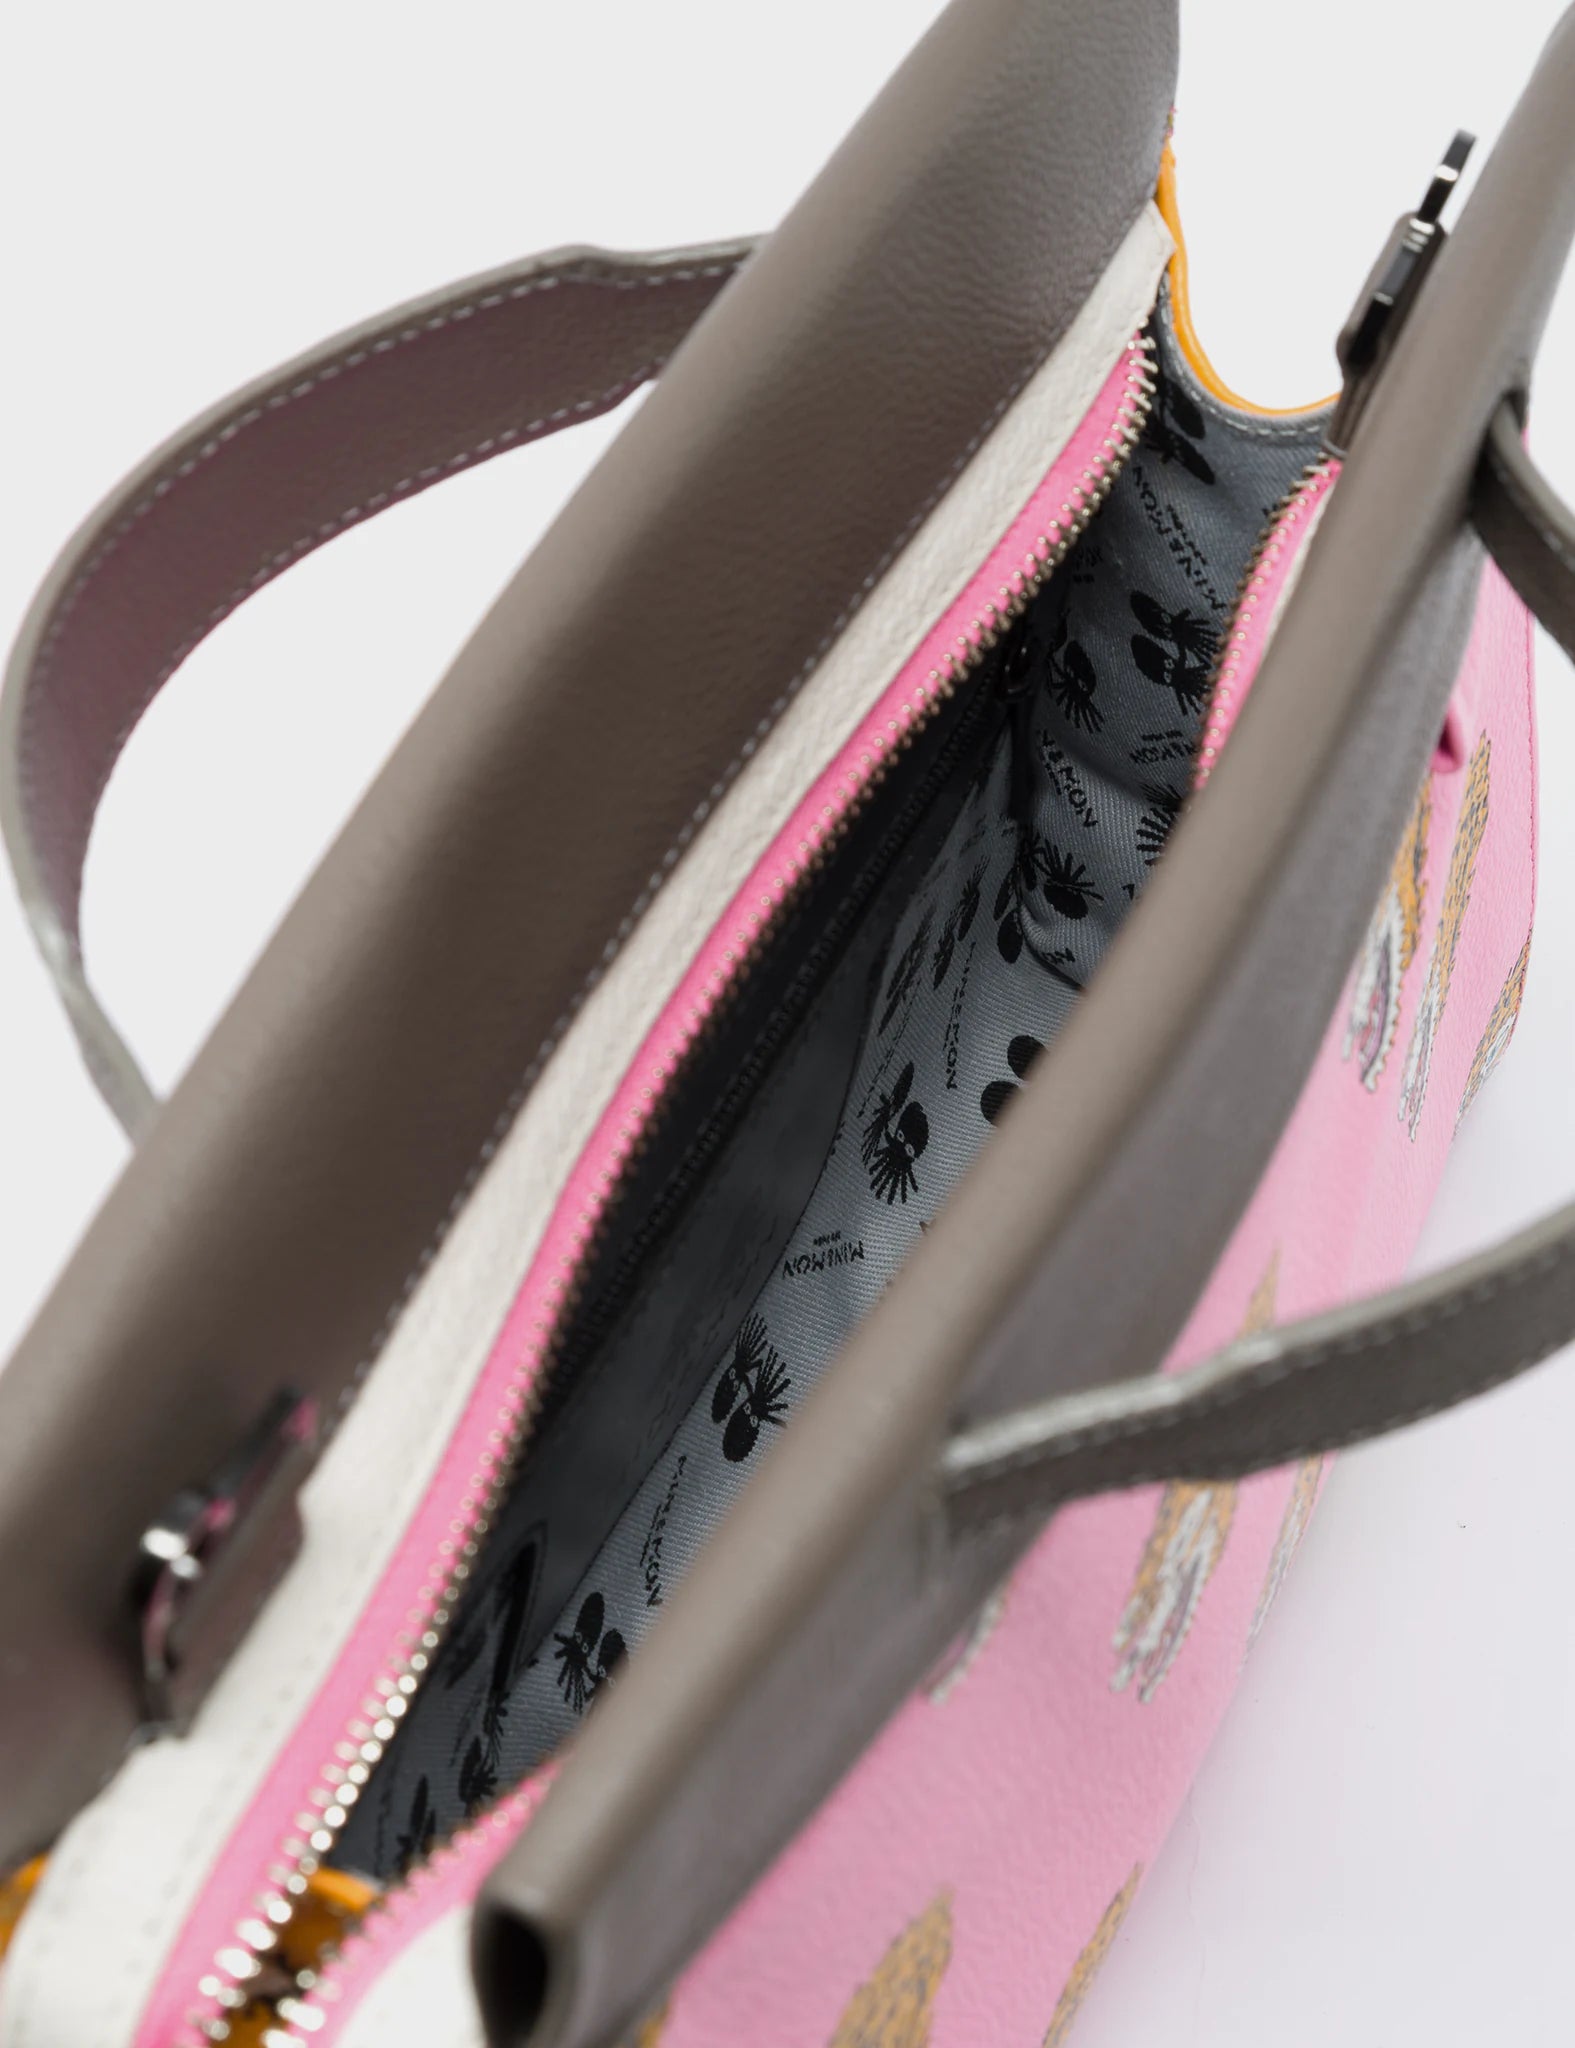 Vali Crossbody Small Taffy Pink Leather Bag - El Tropico Print and Embroidery Design - Inside